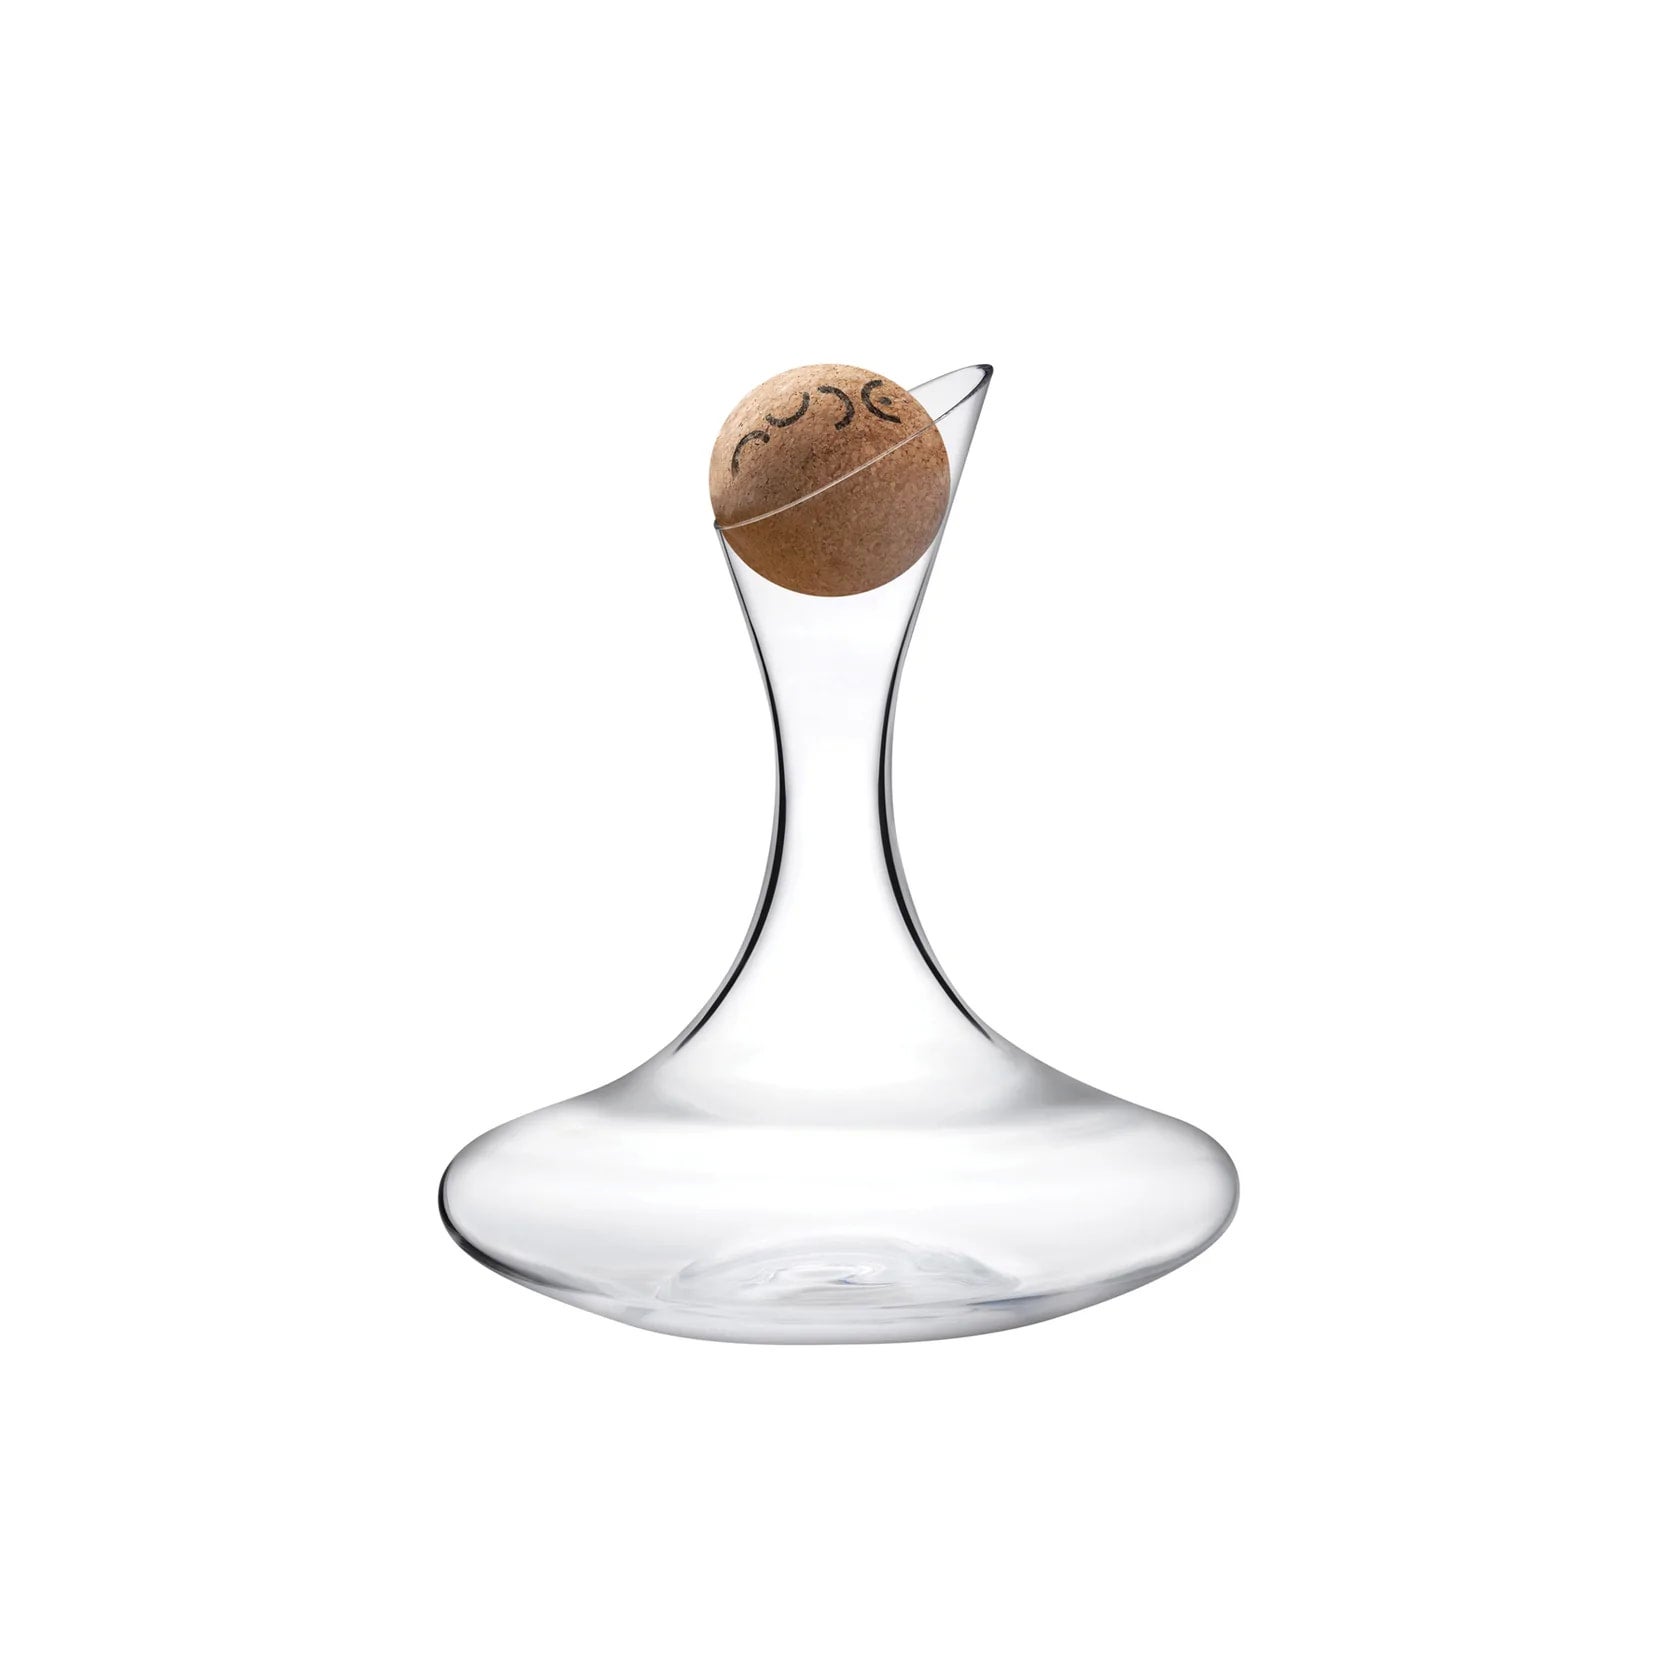 Stemless Wine Glasses, Two Styles, Handblown in Turkey, Nude Glass